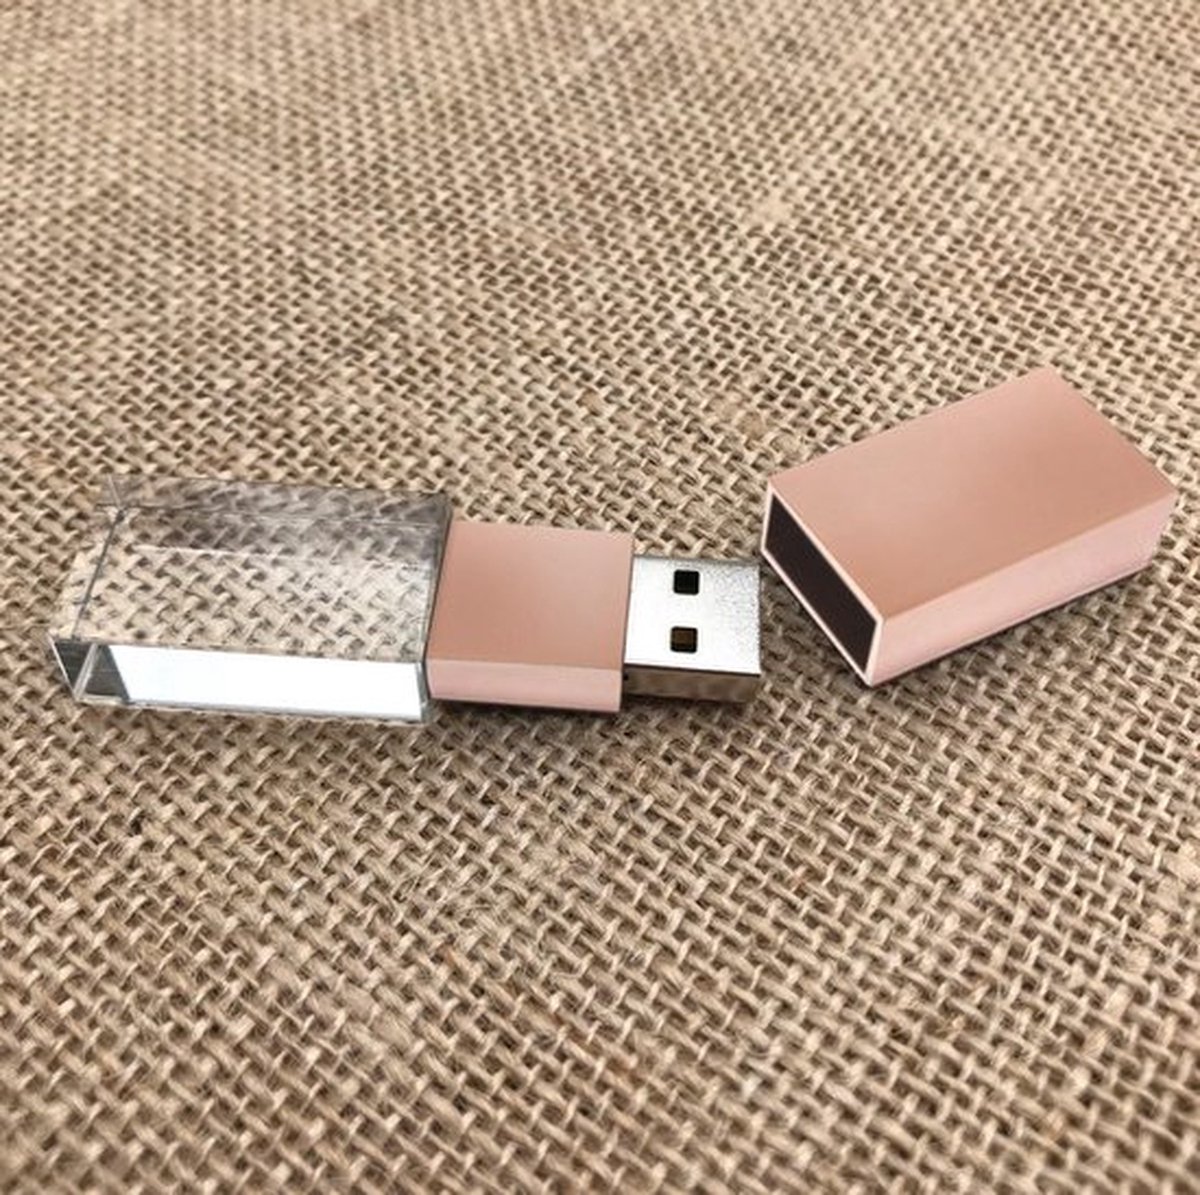 128GB 3.0 Kristal USB stick met brons kleur metale dop - Glas usb stick, glazen usb stick,